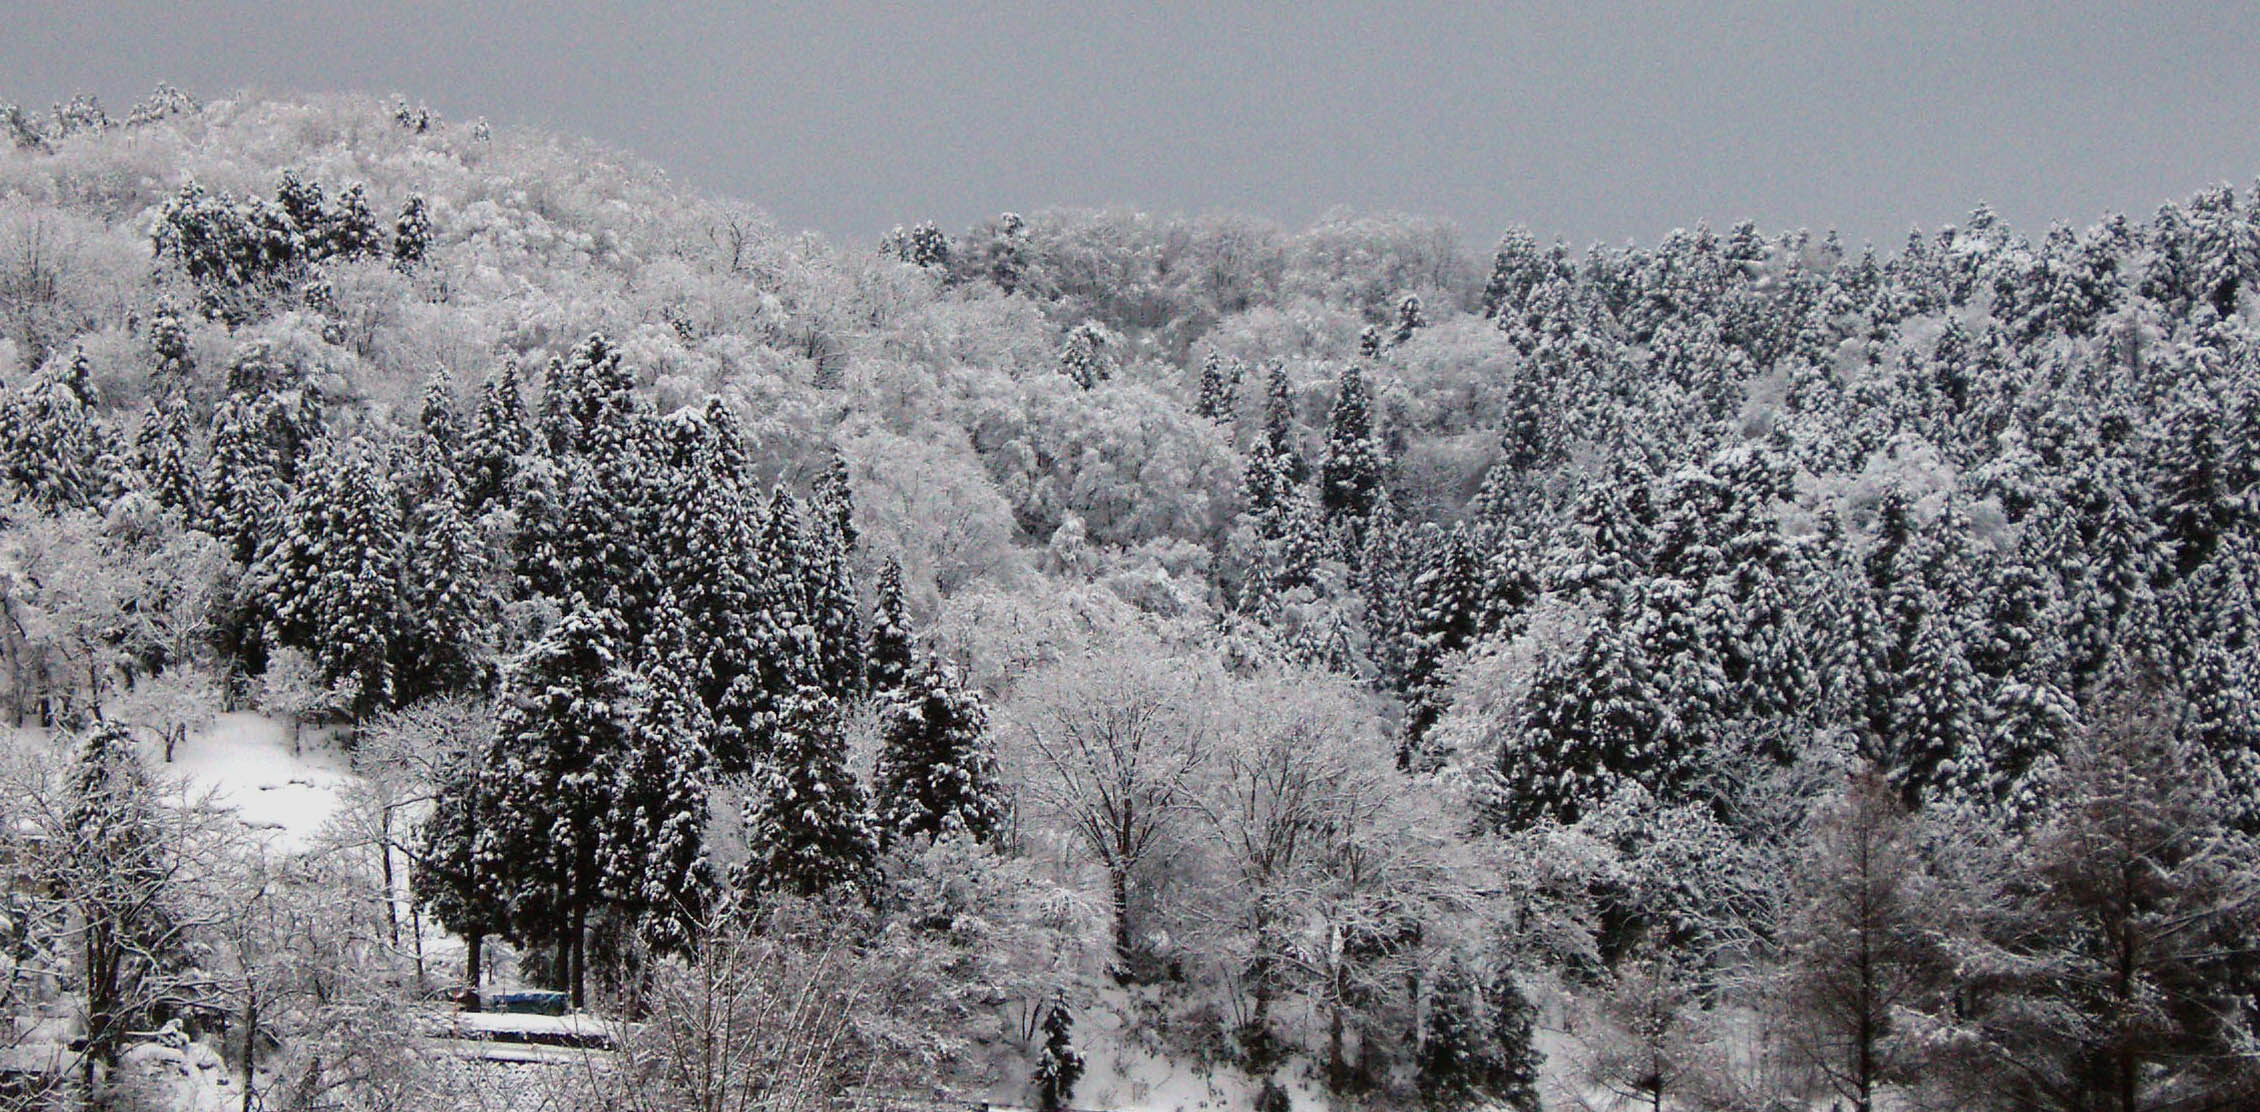 集落裏山の冬景色.jpg